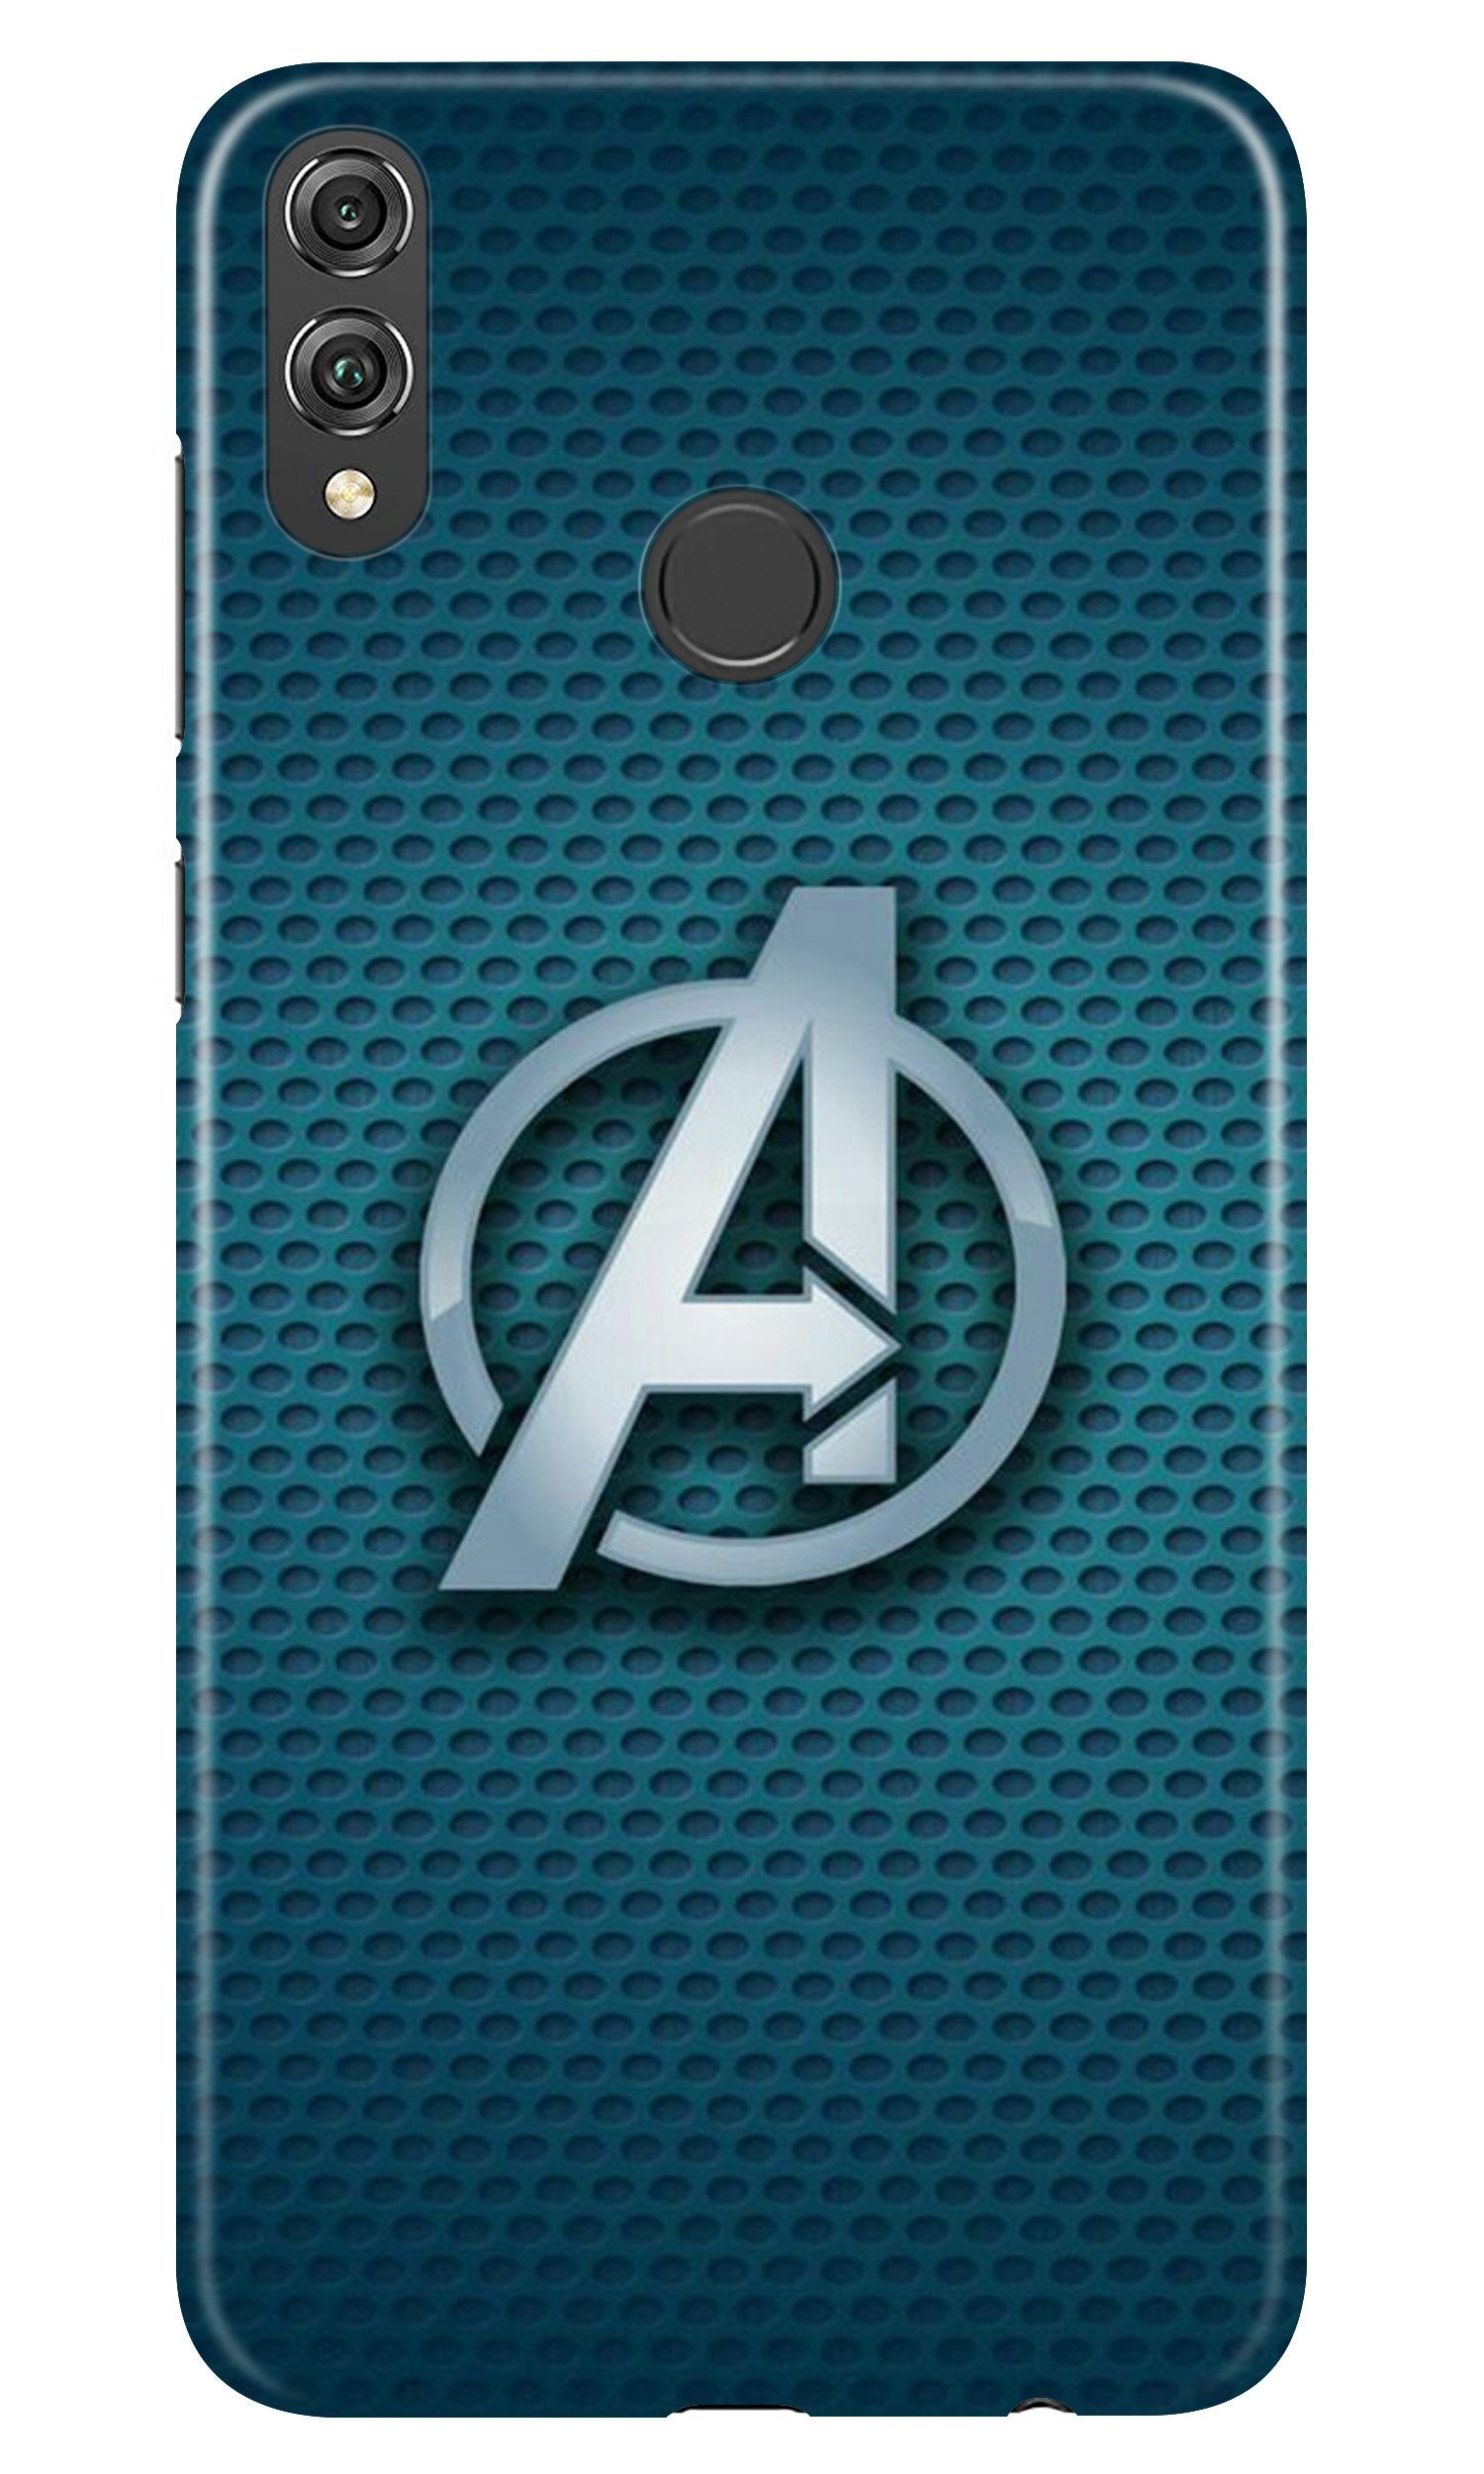 Avengers Case for Infinix Hot 7 Pro (Design No. 246)